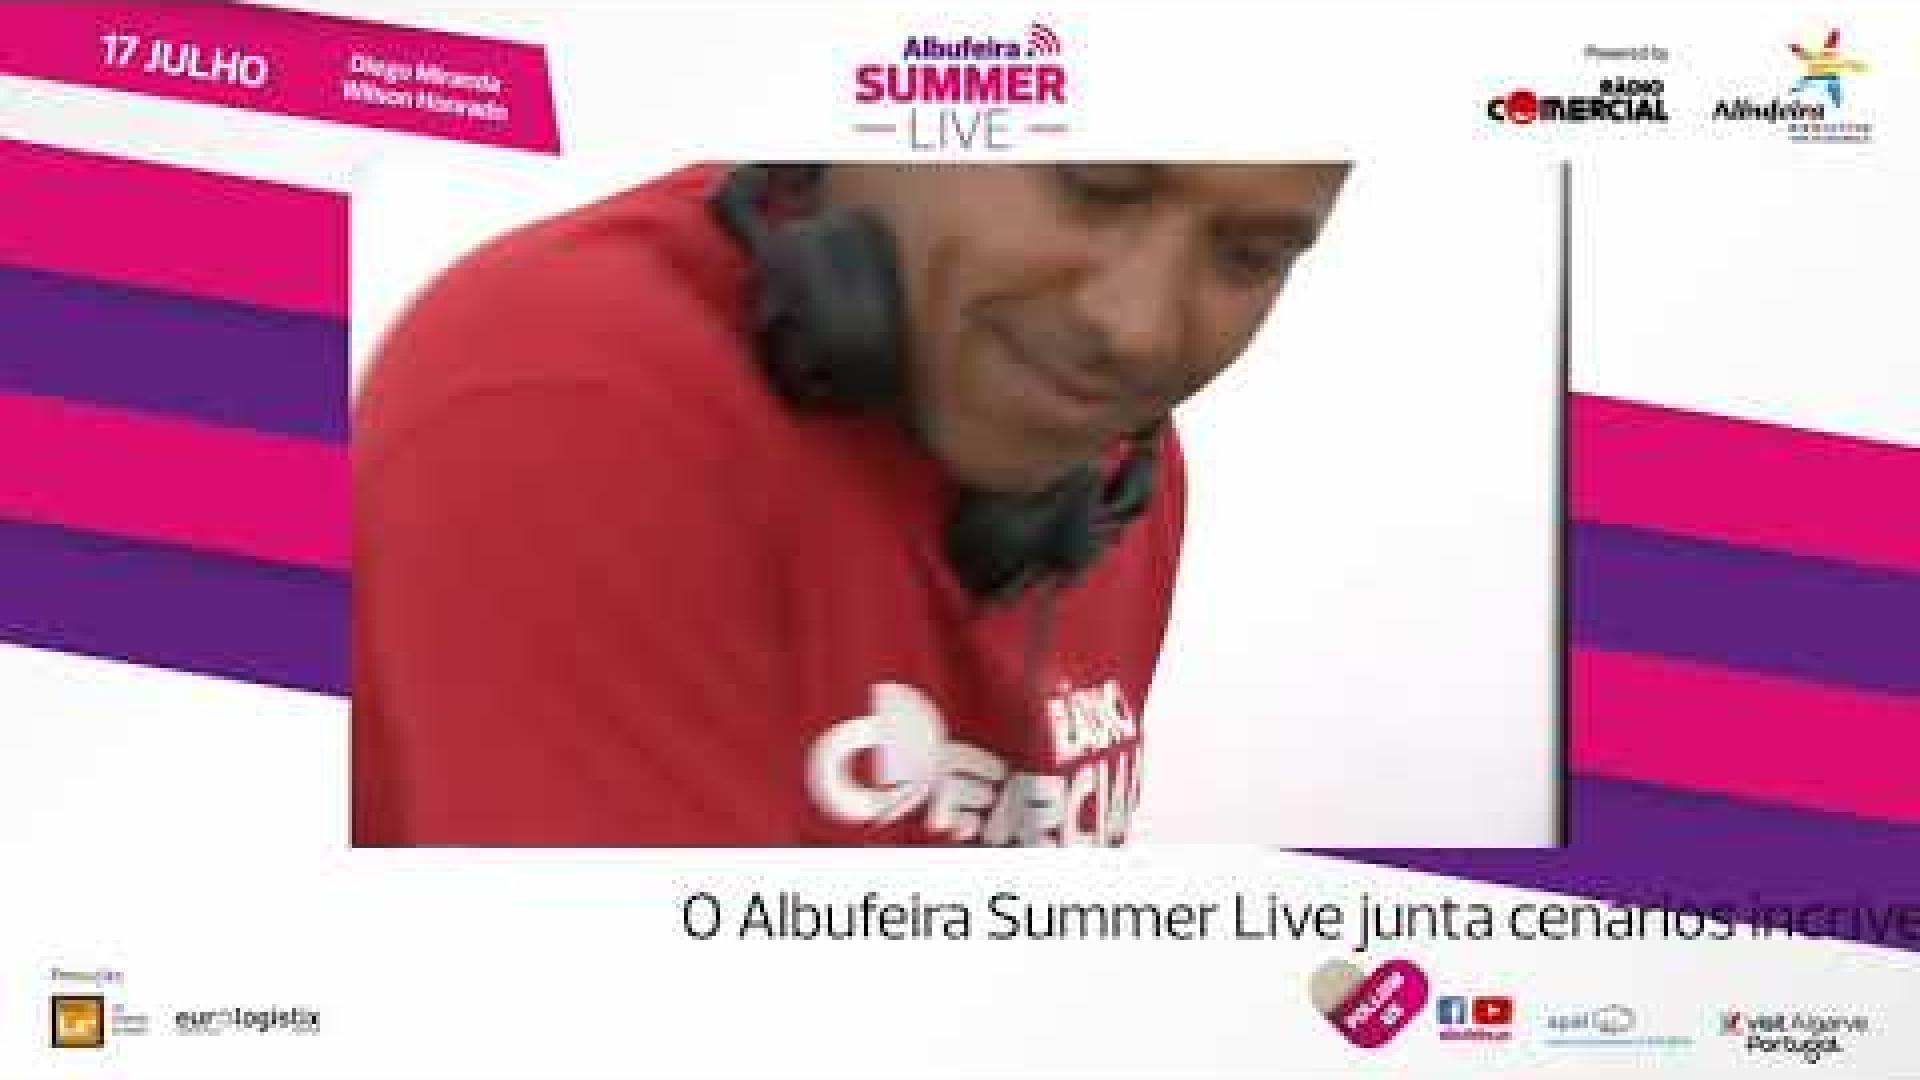 Preview image for the video "Albufeira Summer Live - 17 de Julho".